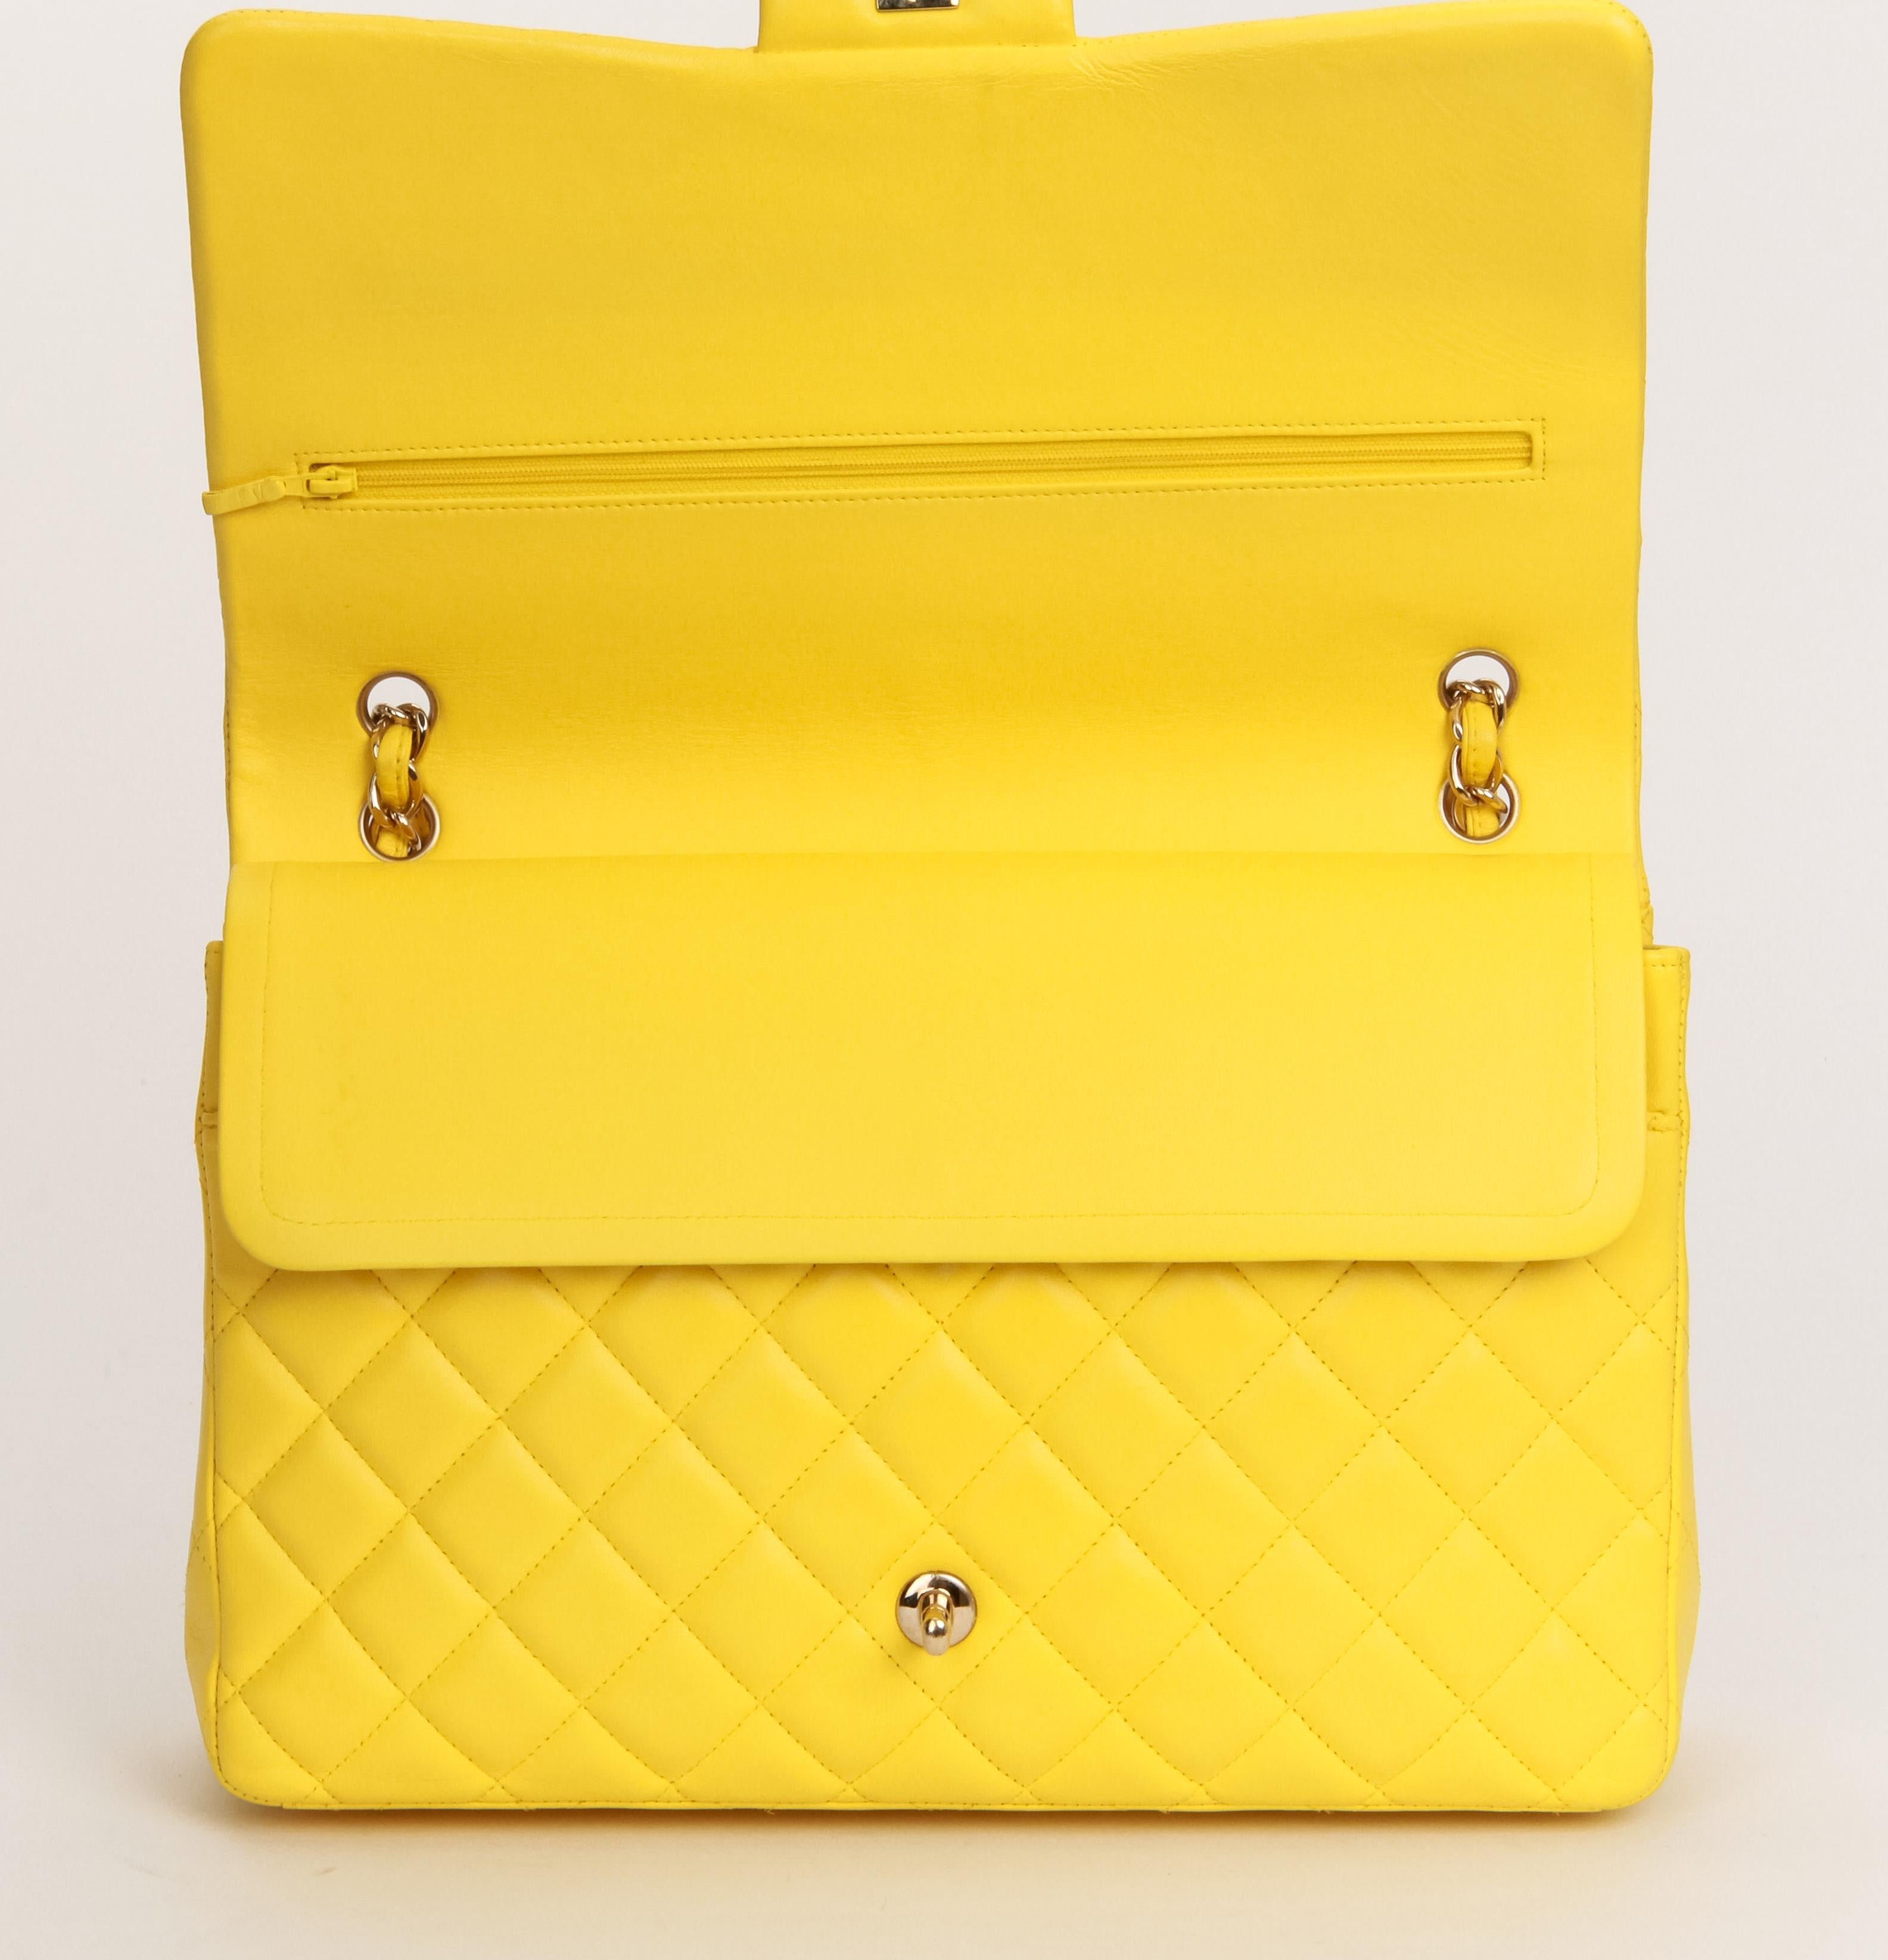 Chanel Rare Maxi Yellow Double Flap Bag 2